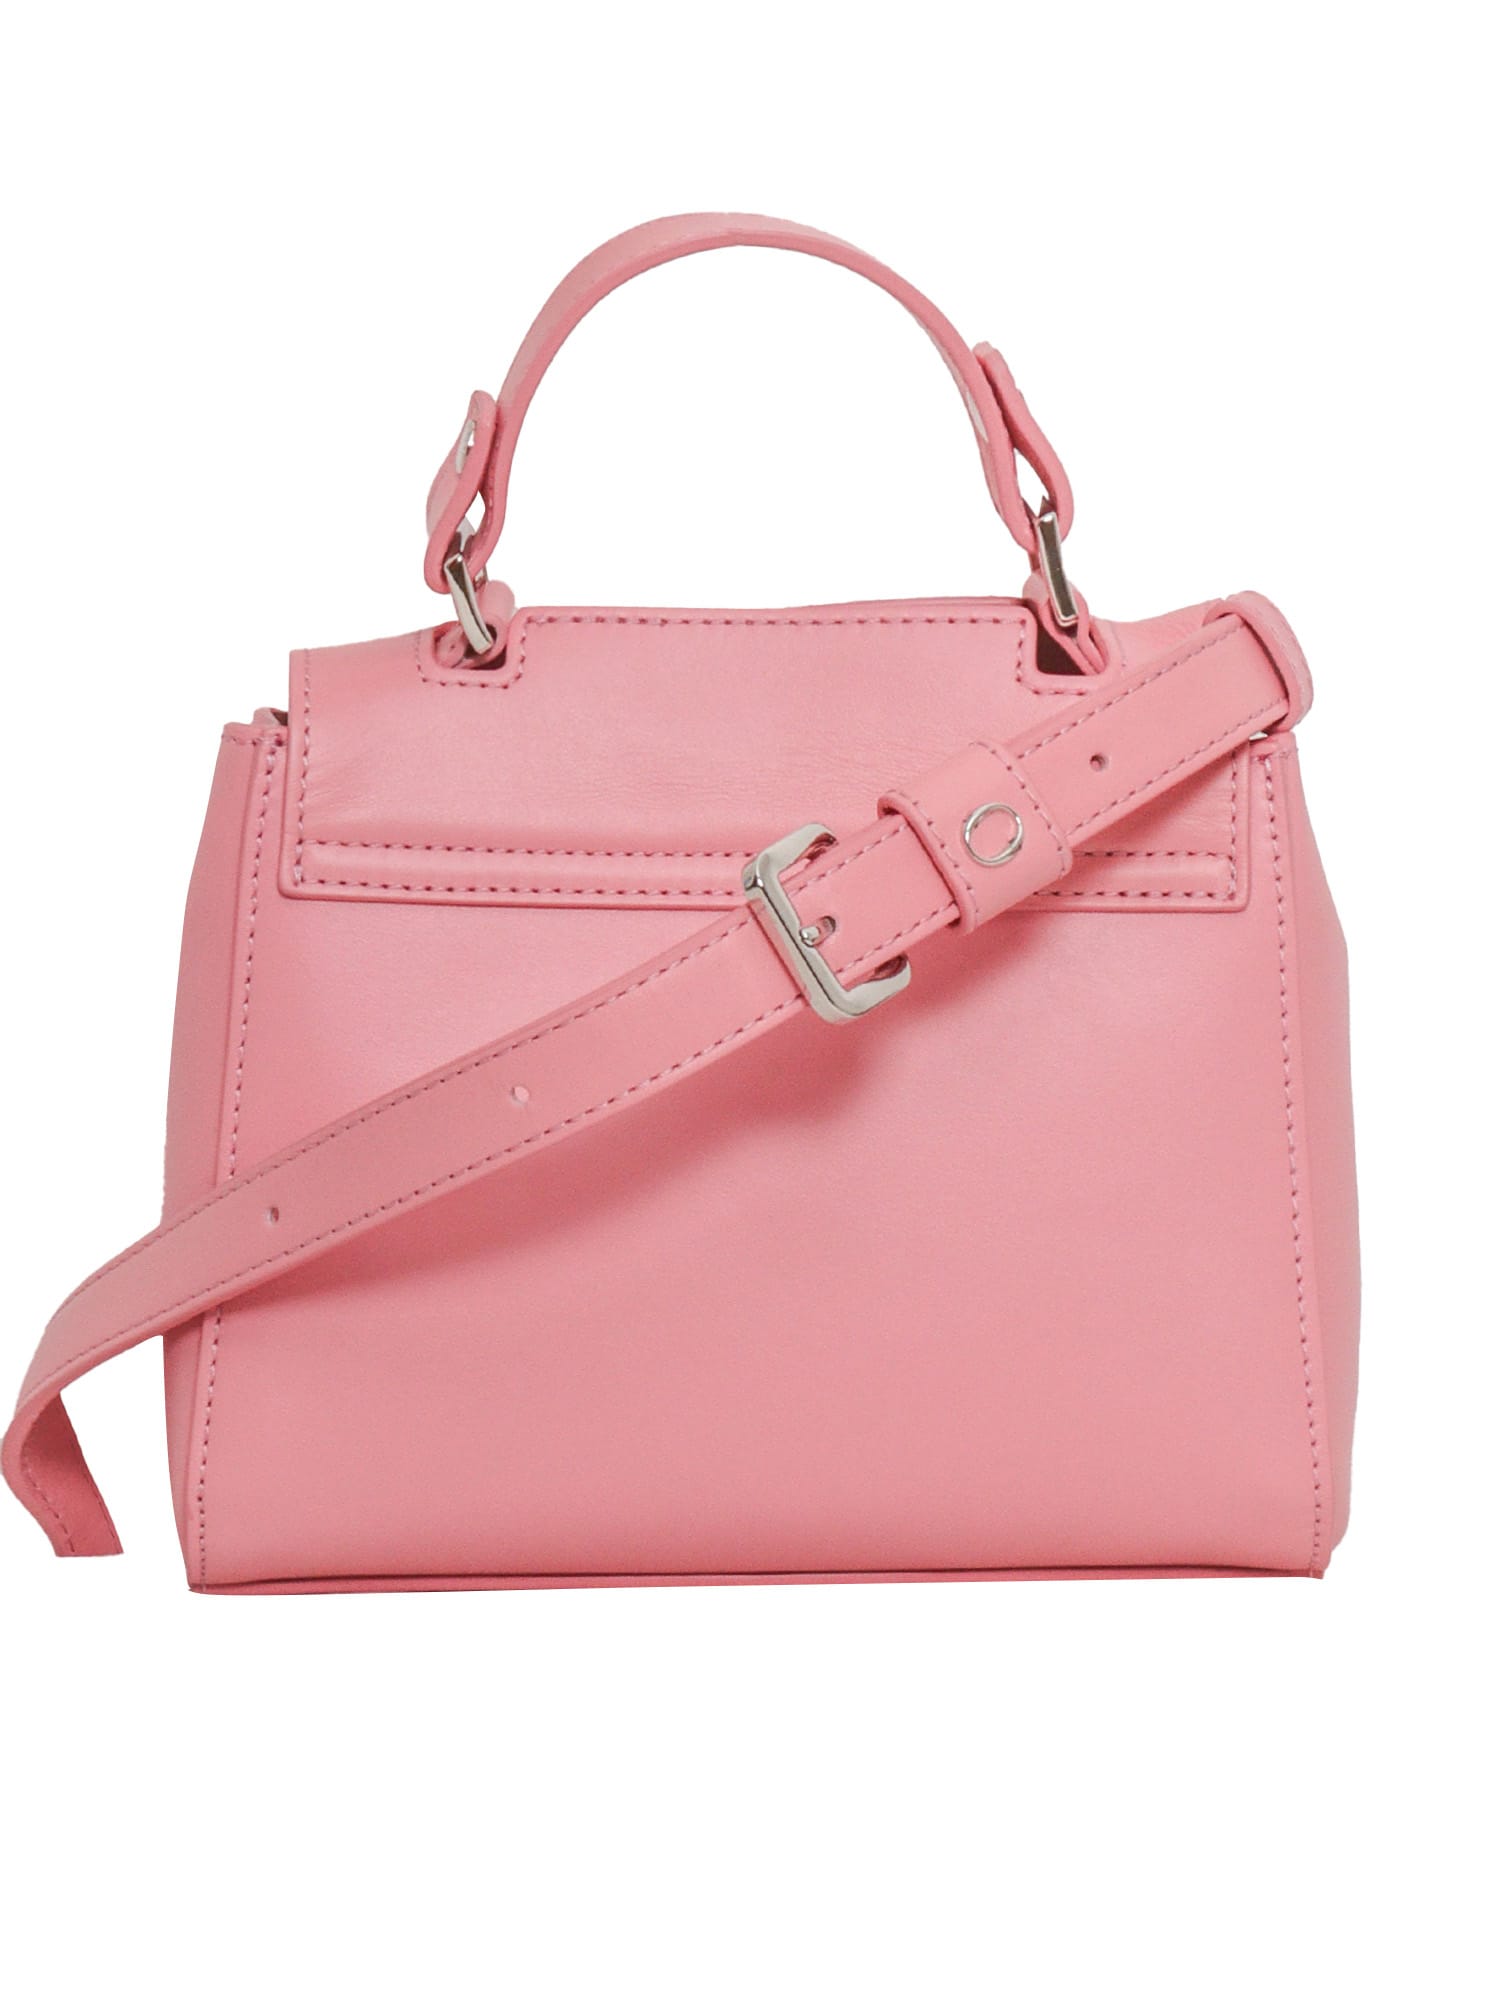 Shop Orciani Pink Handbag